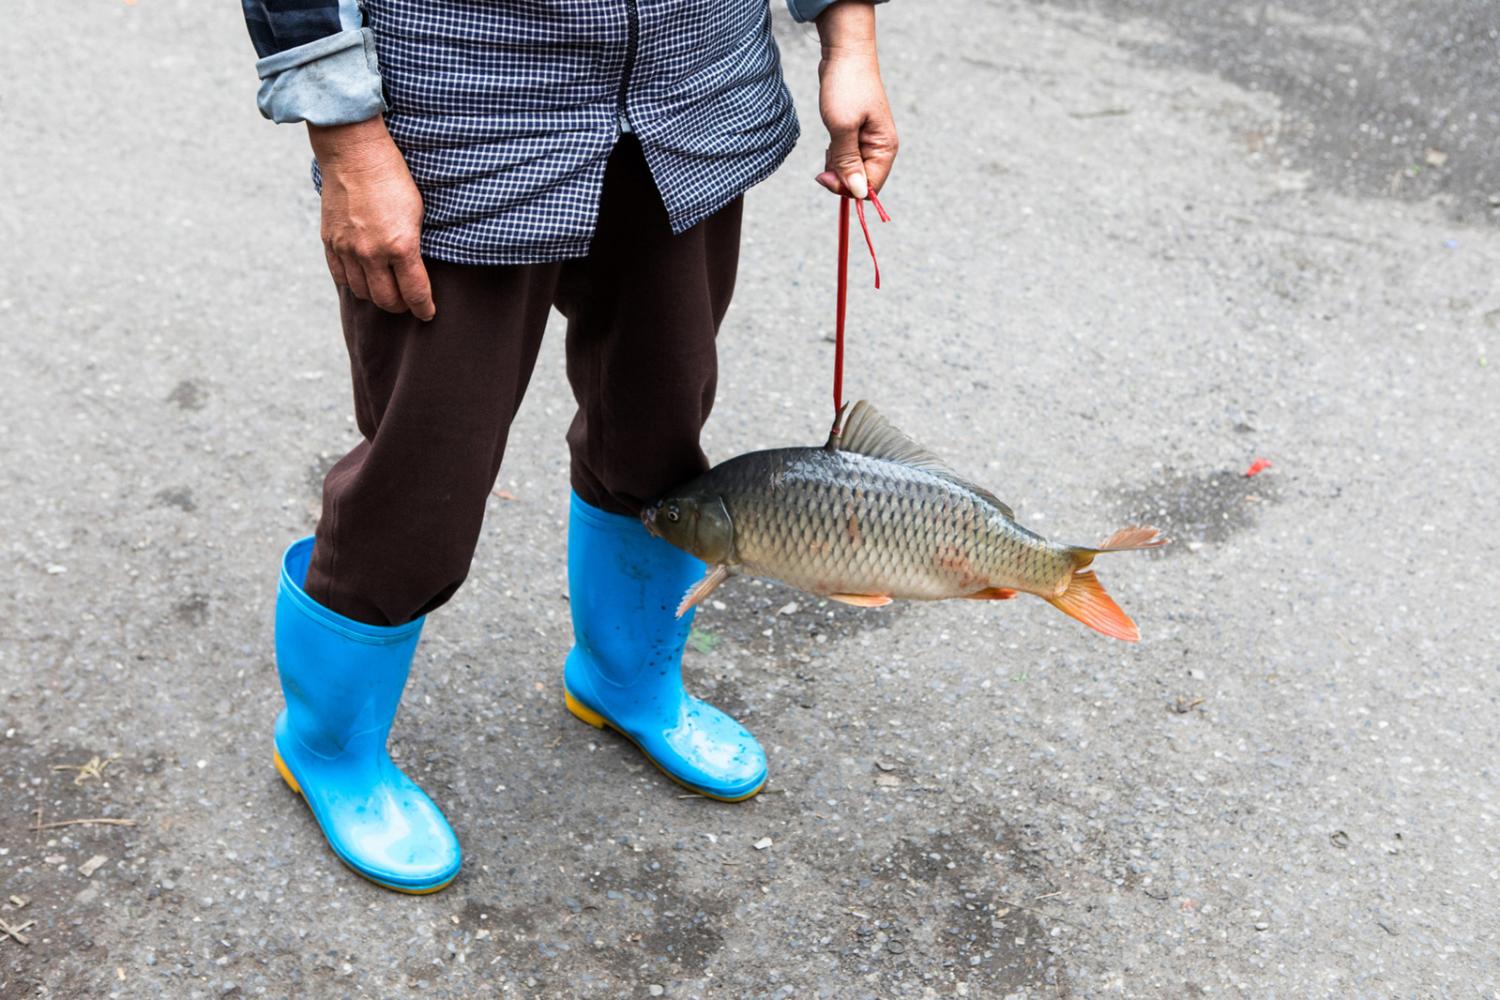 A fishmonger carries a fish in Hanoi, Vietnam.